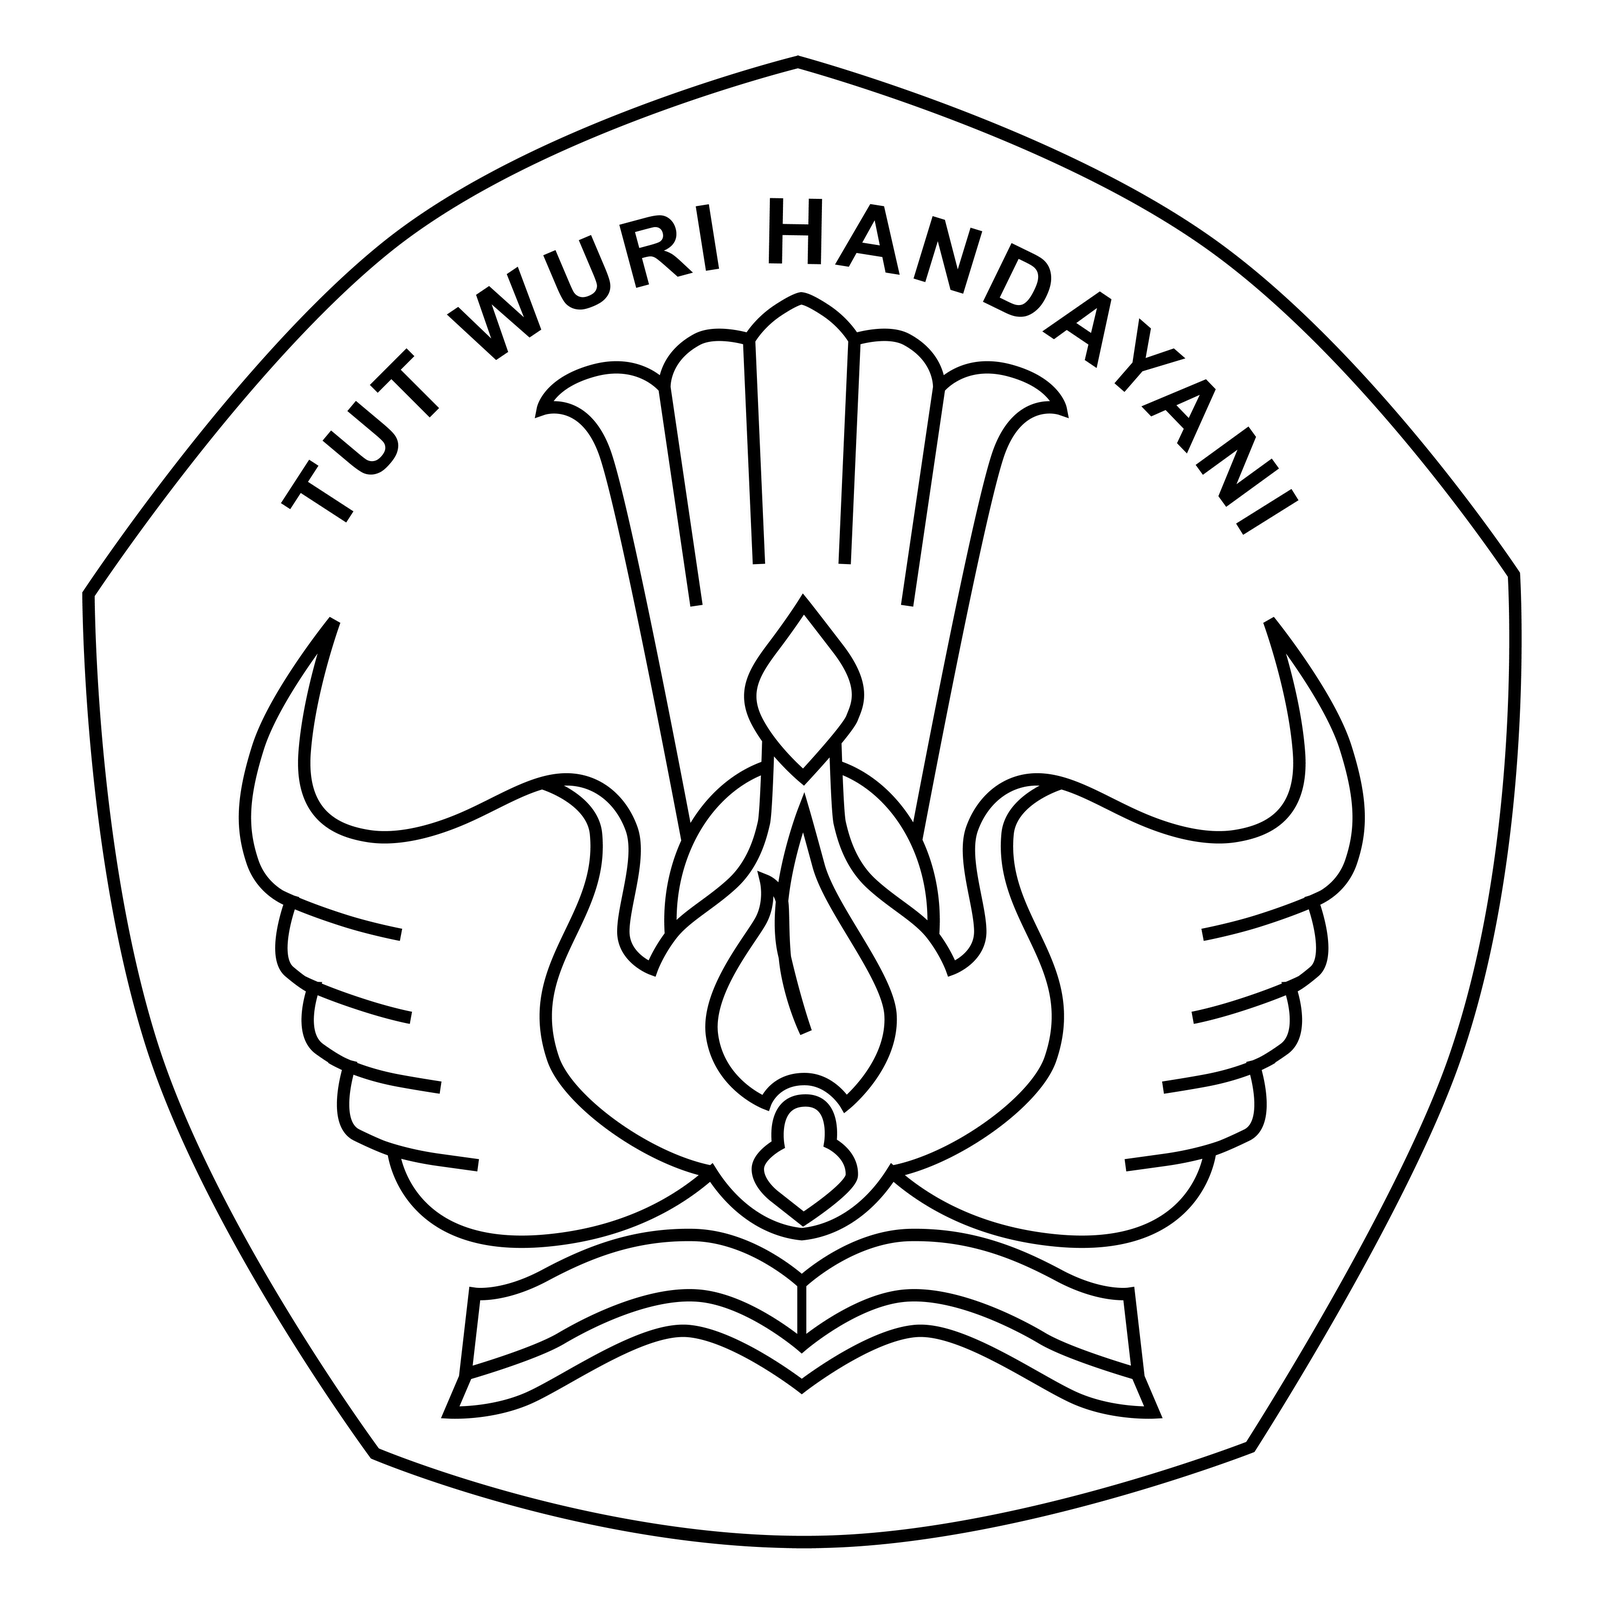 Ks Tiga Naga Wikipedia Bahasa Indonesia Ensiklopedia Bebas